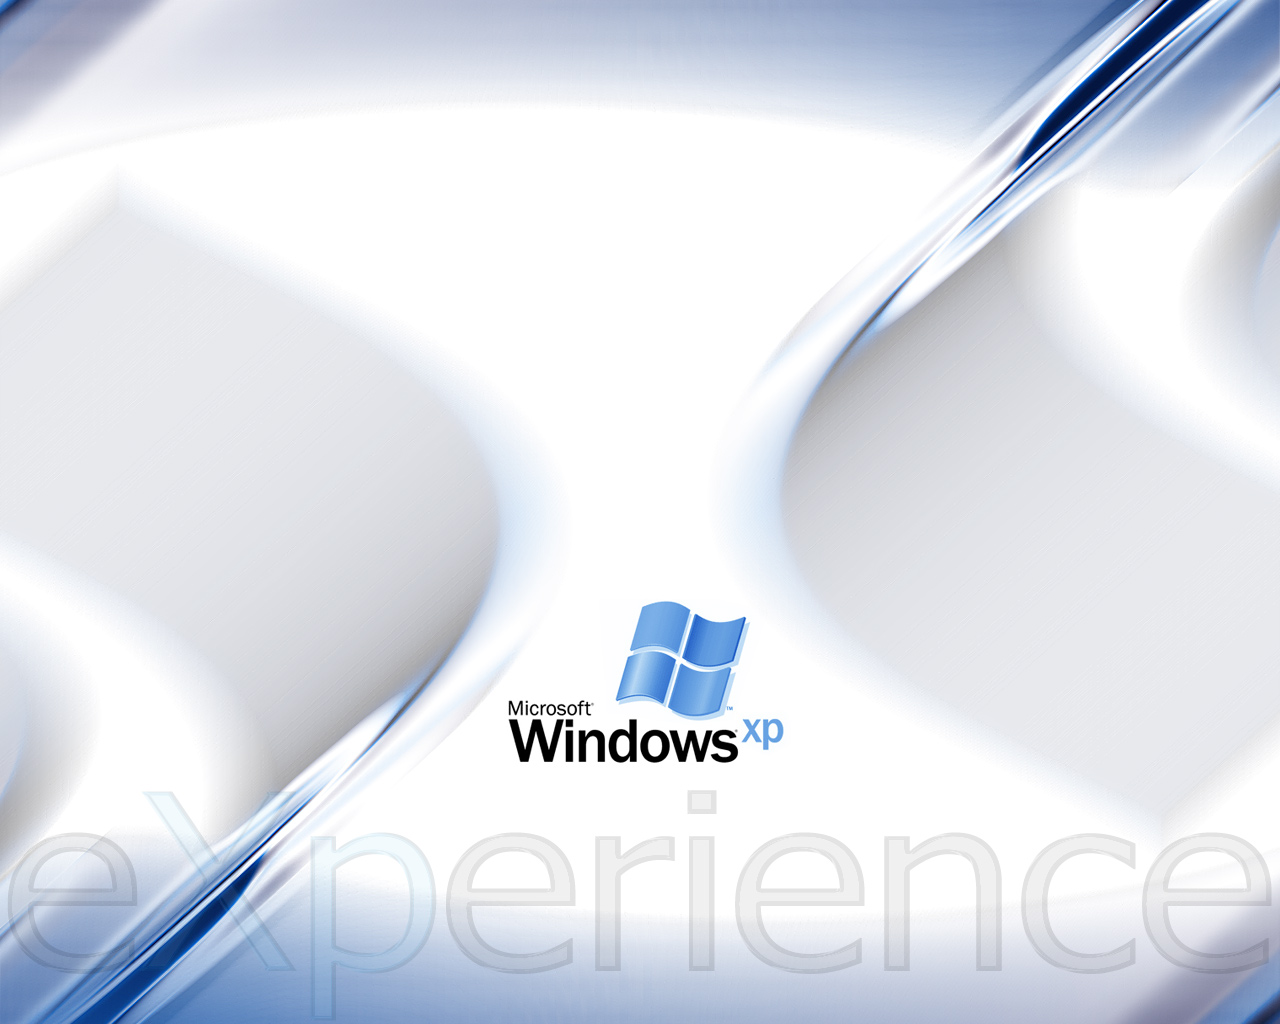 Puters Microsoft Windows Xp Experience Pack Desktop